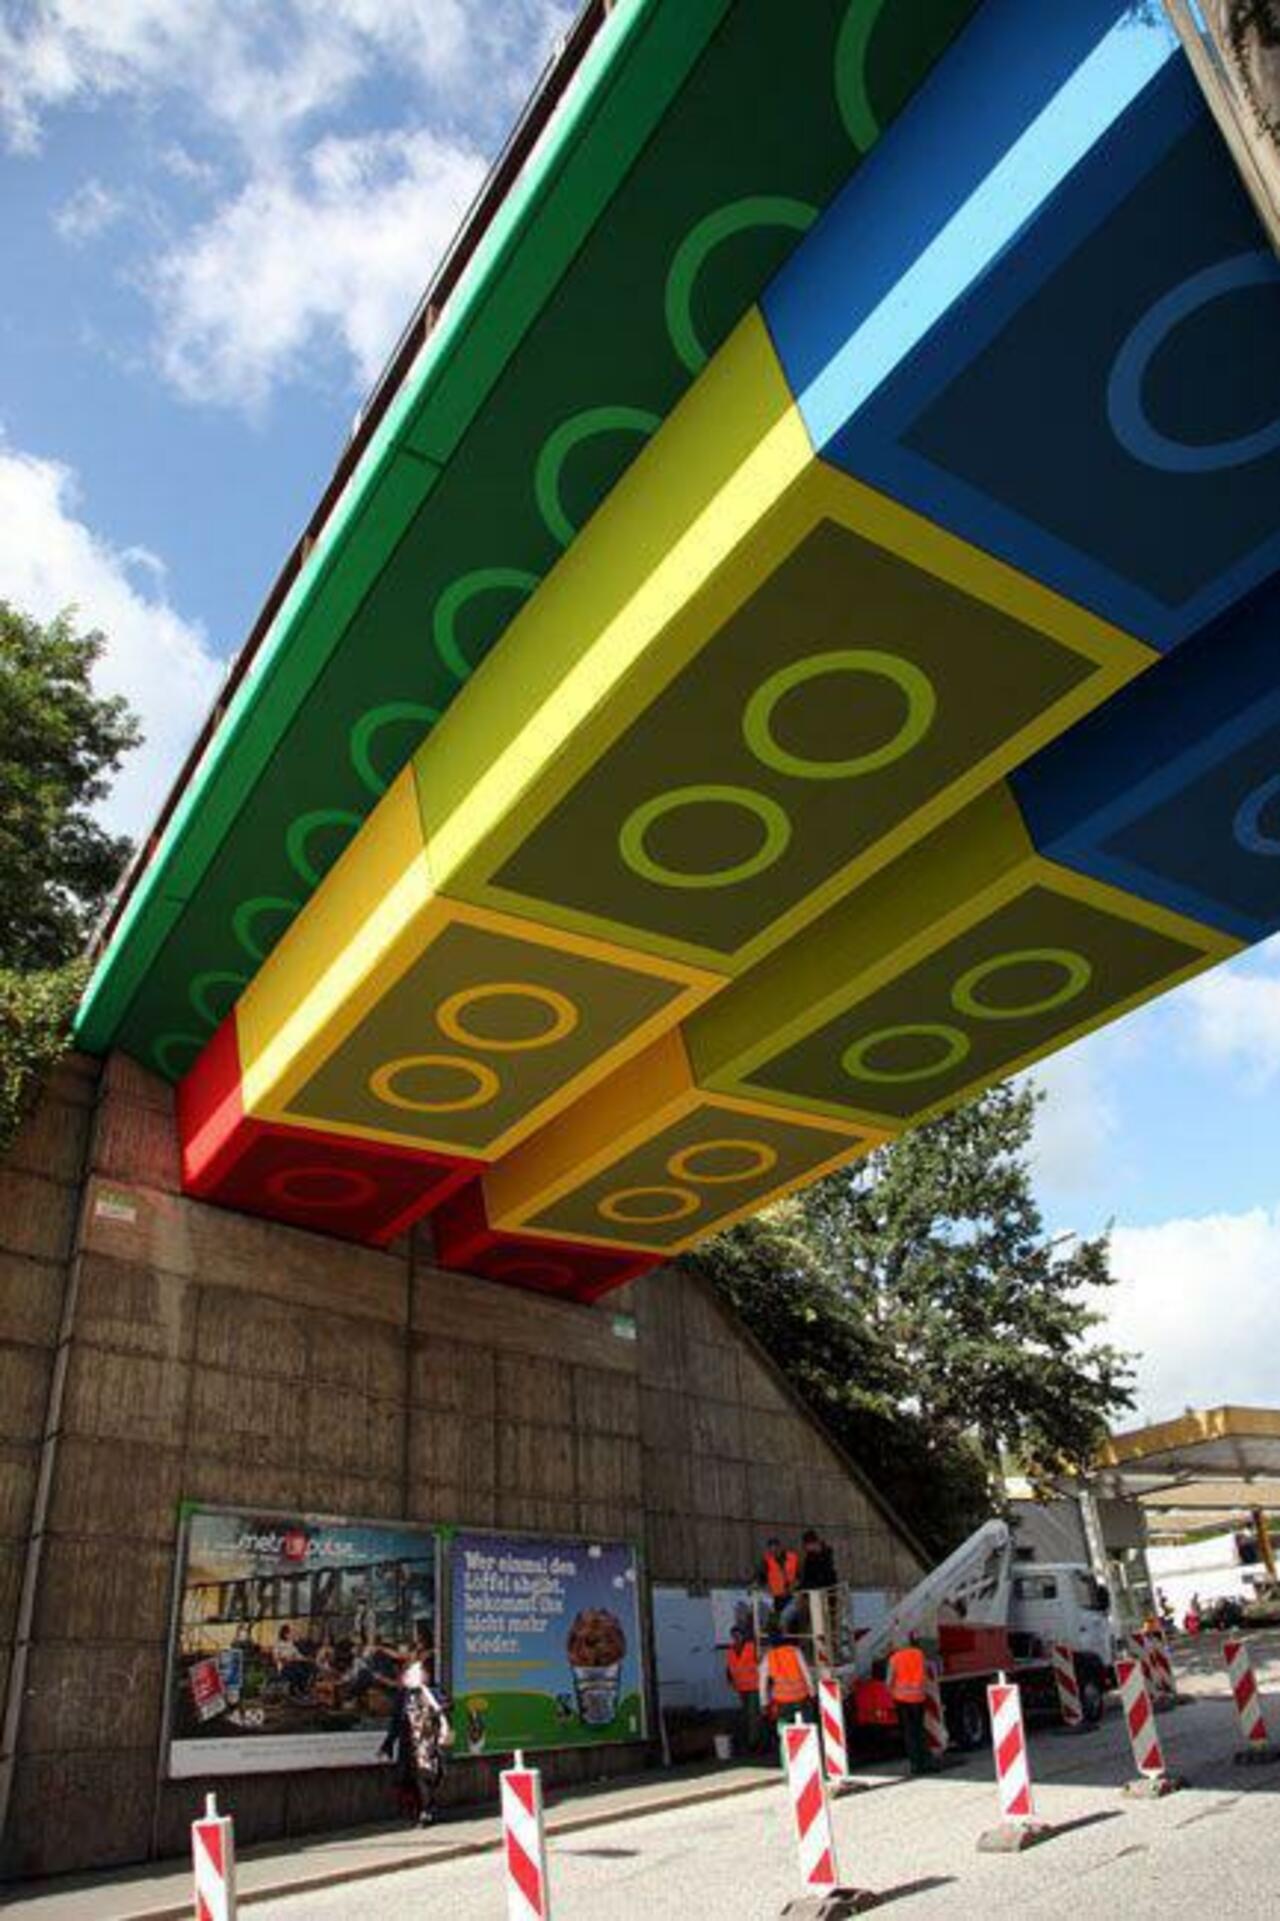 RT @AuKeats: #switch #LEGO into #streetart #germany #bedifferent #graffiti #arte #art http://t.co/858gmsknJq